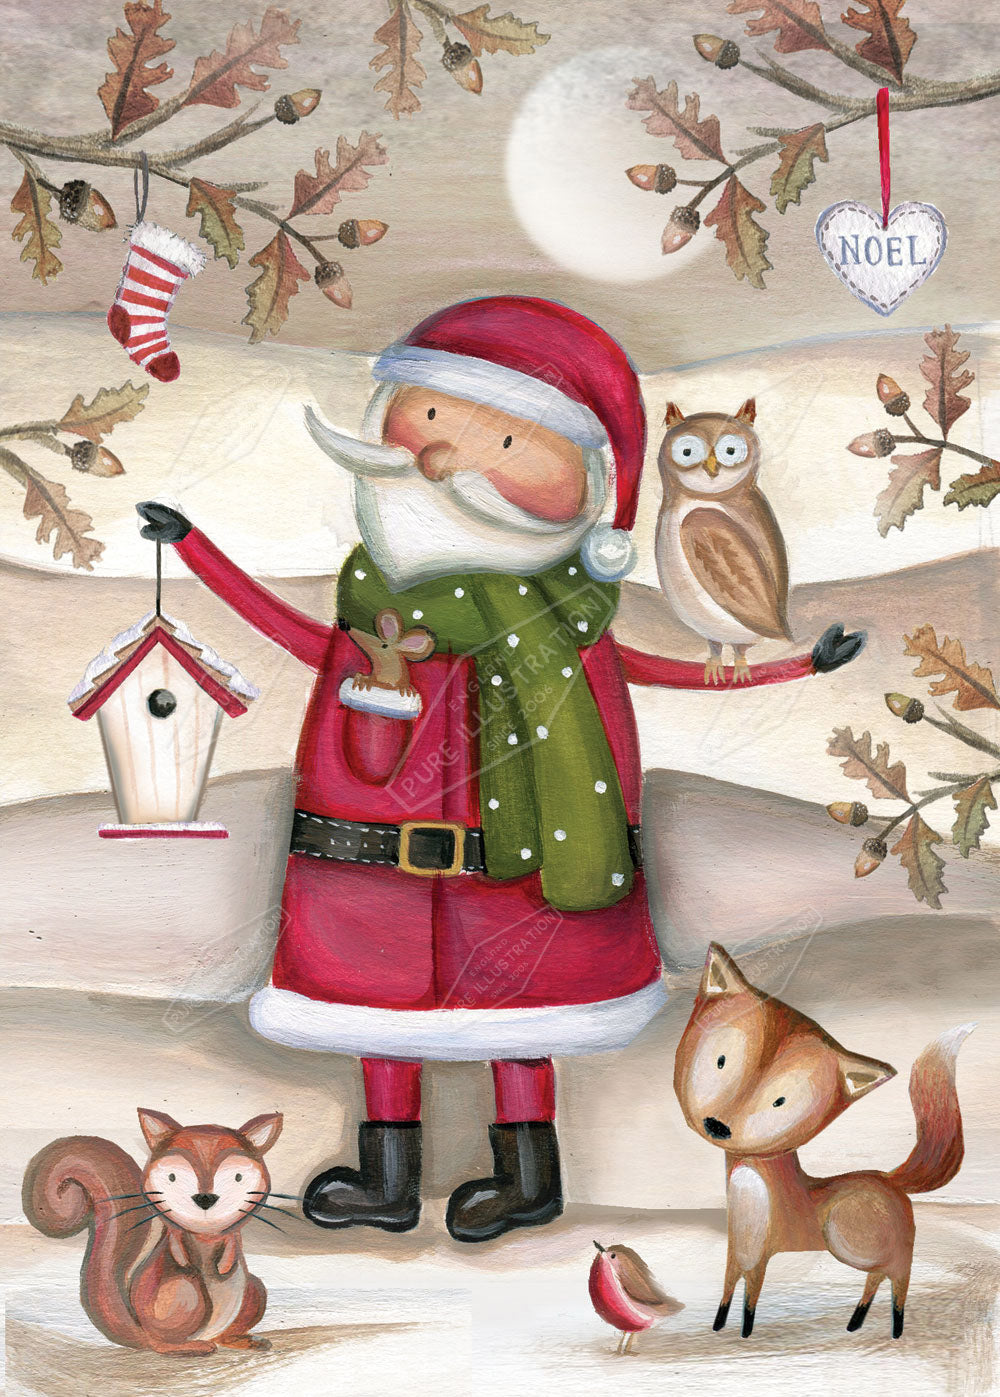 00023136DEV - Deva Evans is represented by Pure Art Licensing Agency - Christmas Greeting Card Design